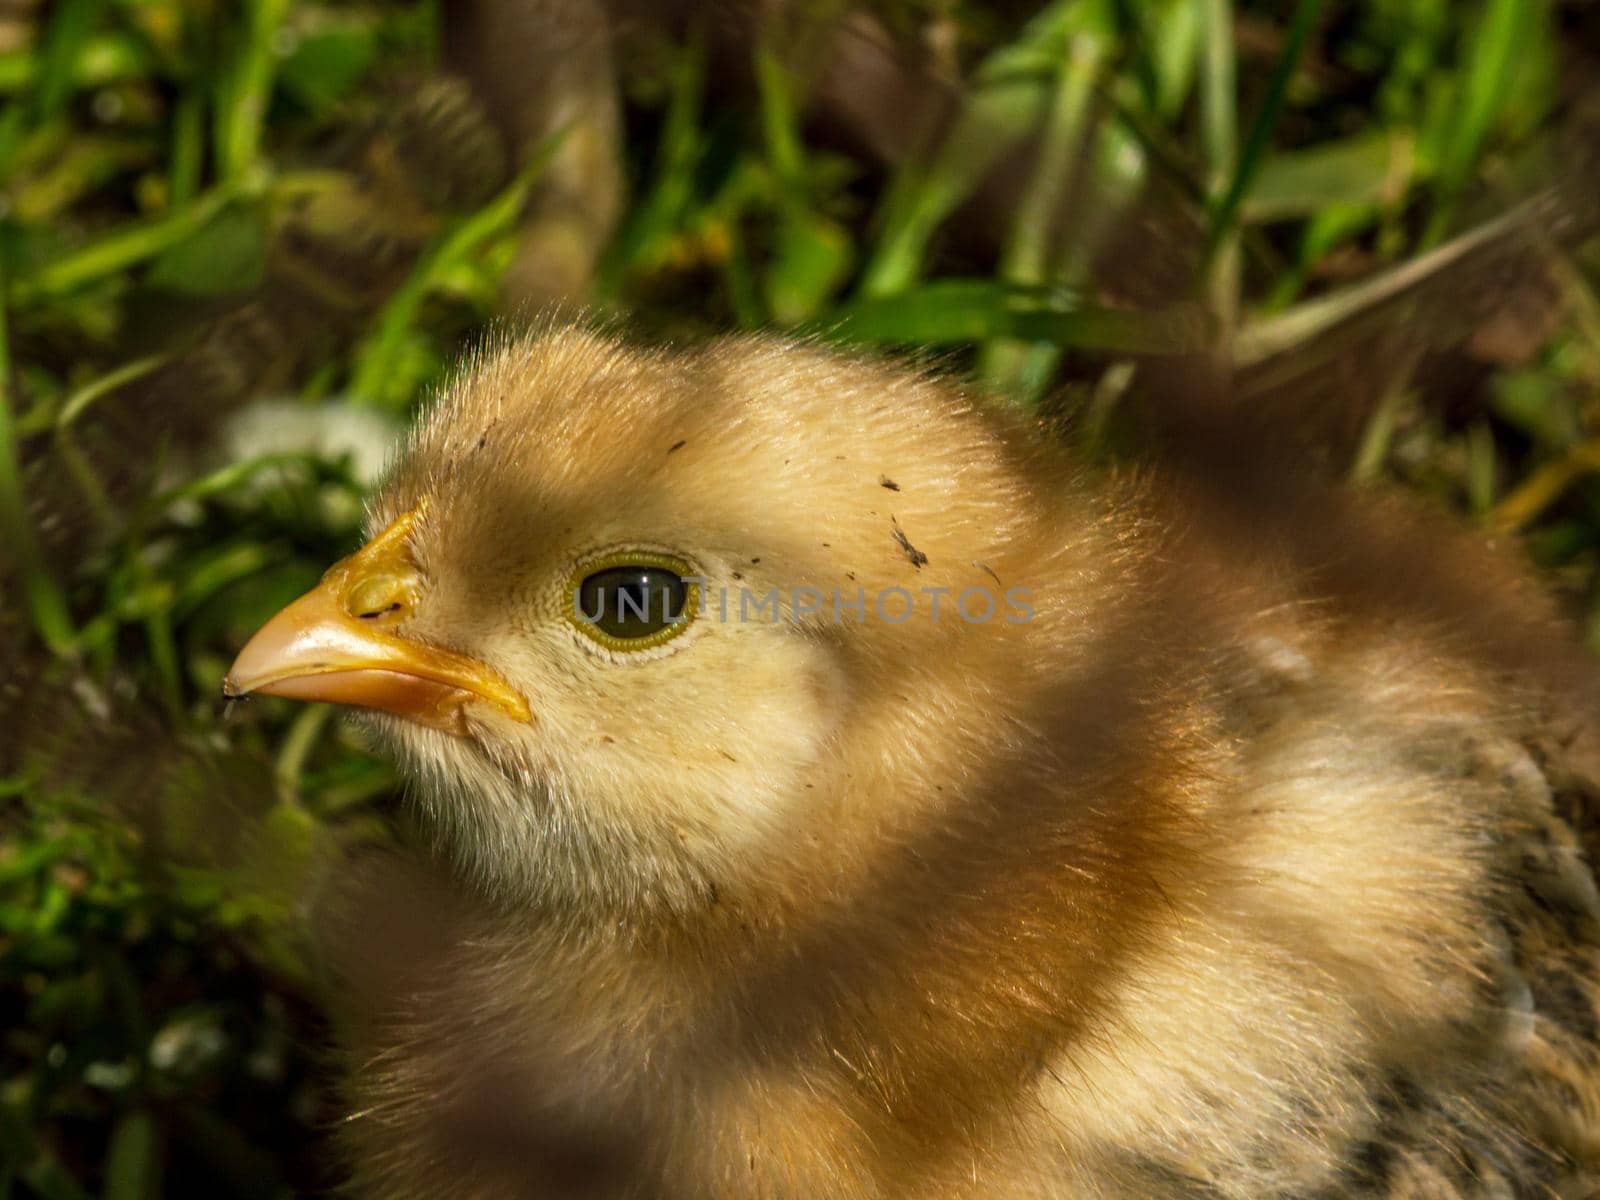 Little chicken fluffy yellow baby chick